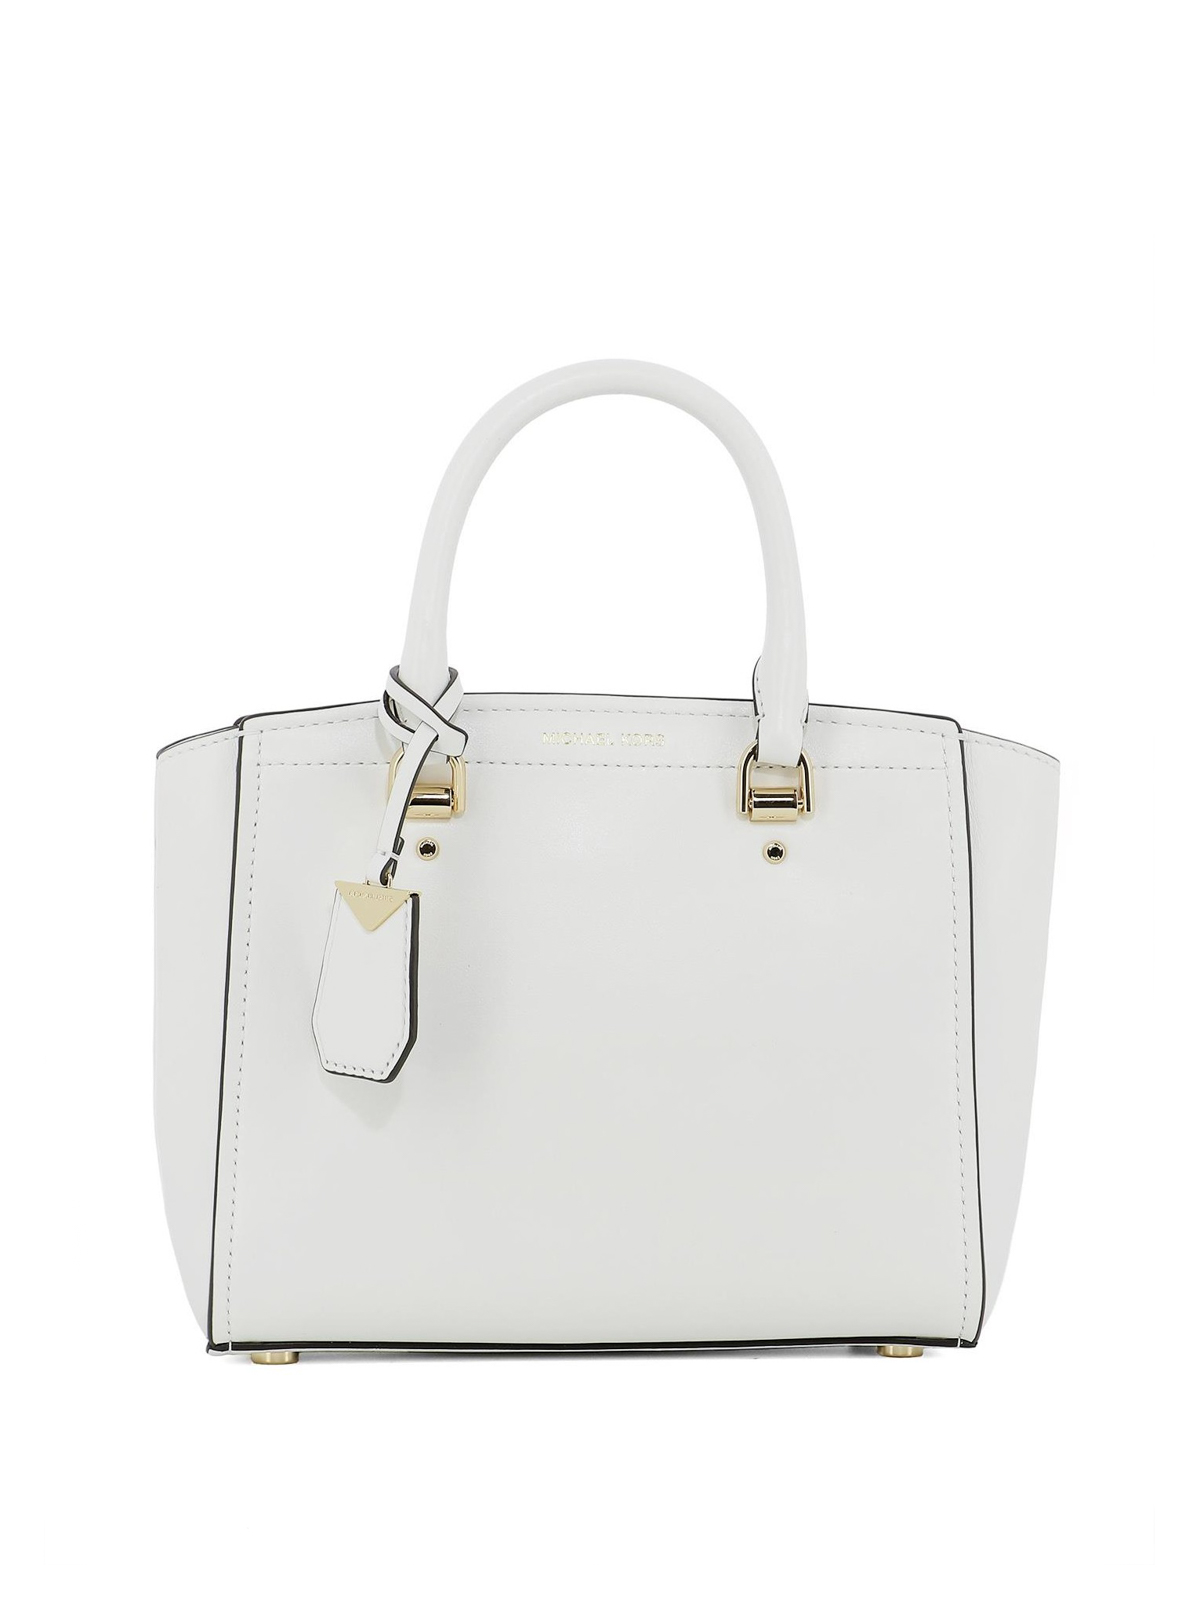 michael kors white leather handbags